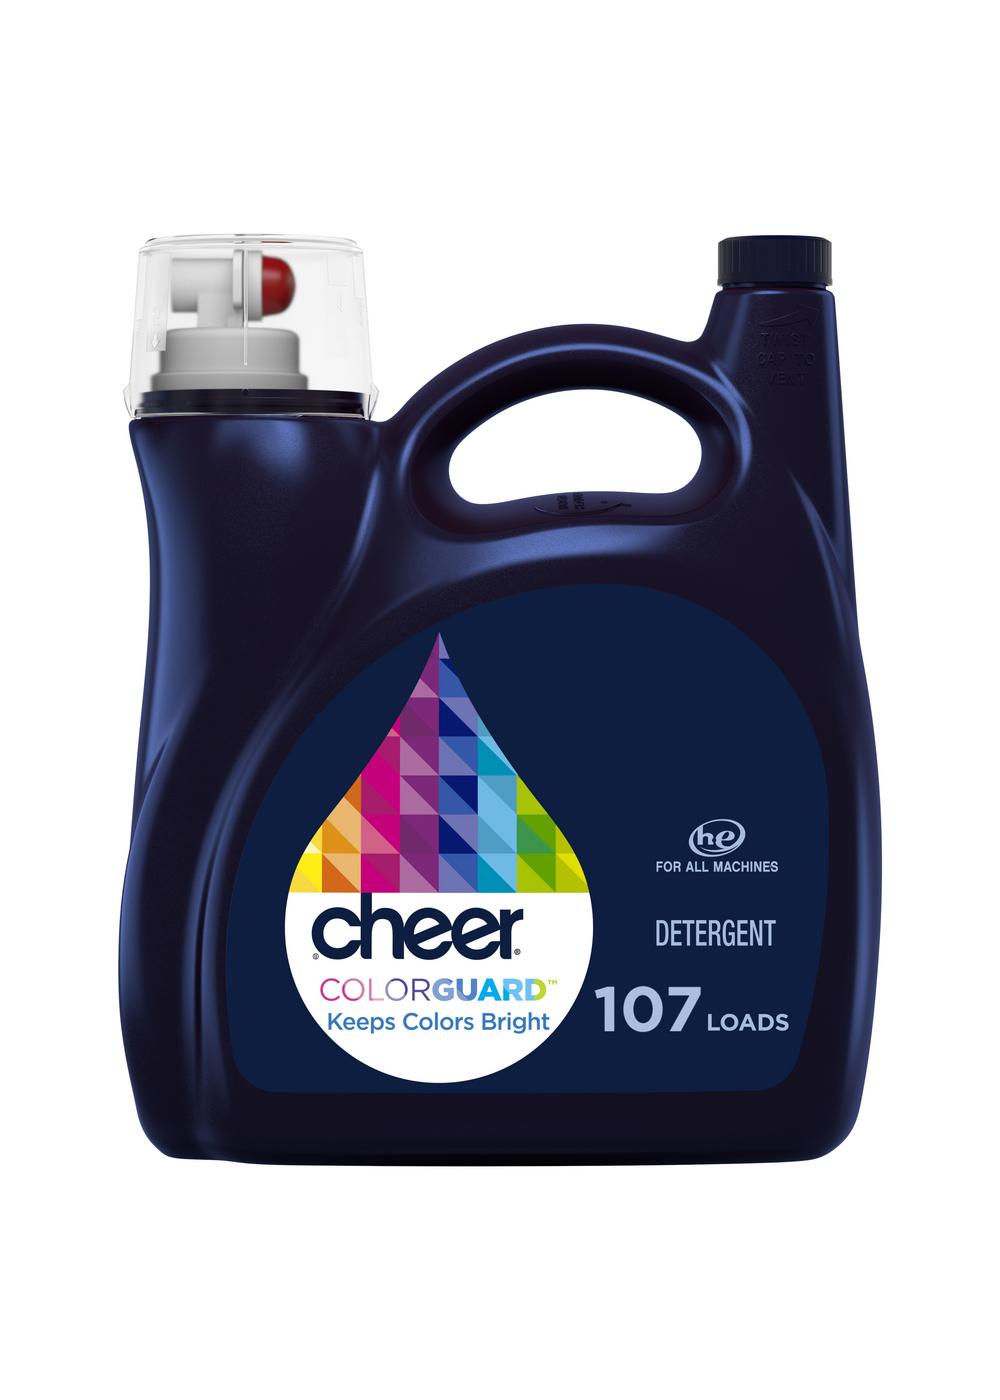 Cheer Colorguard HE Liquid Laundry Detergent, 107 Loads; image 1 of 6